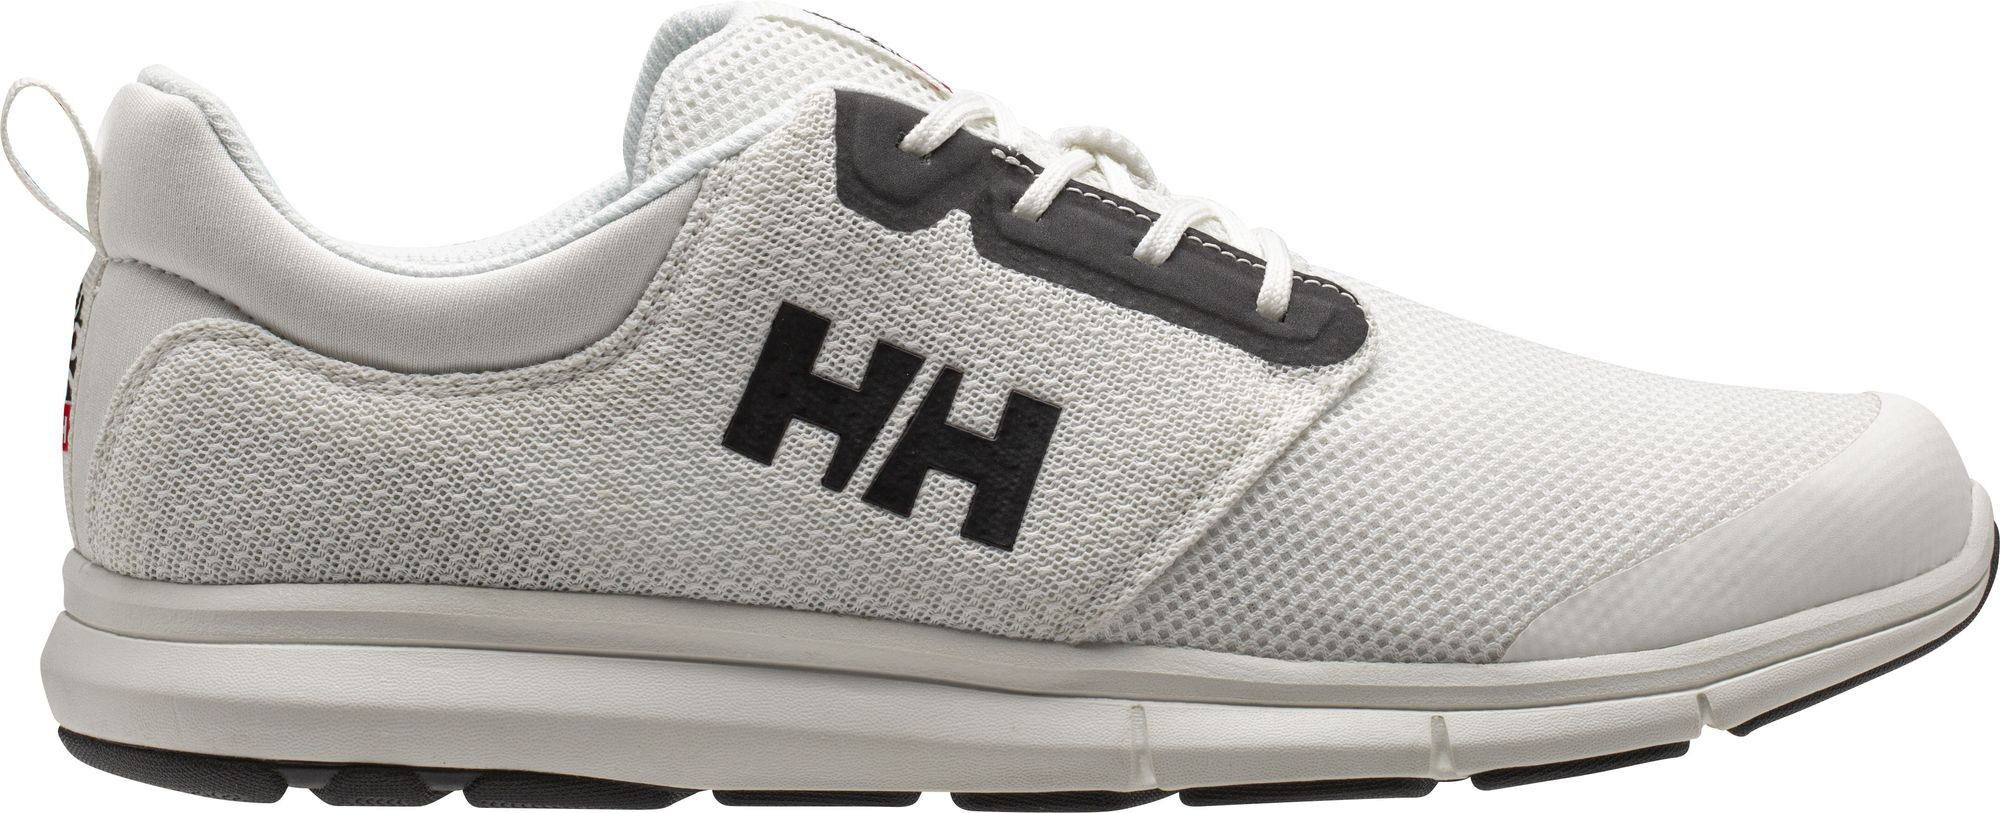 Helly Hansen Feathering - Sailing shoes - Men's | Hardloop